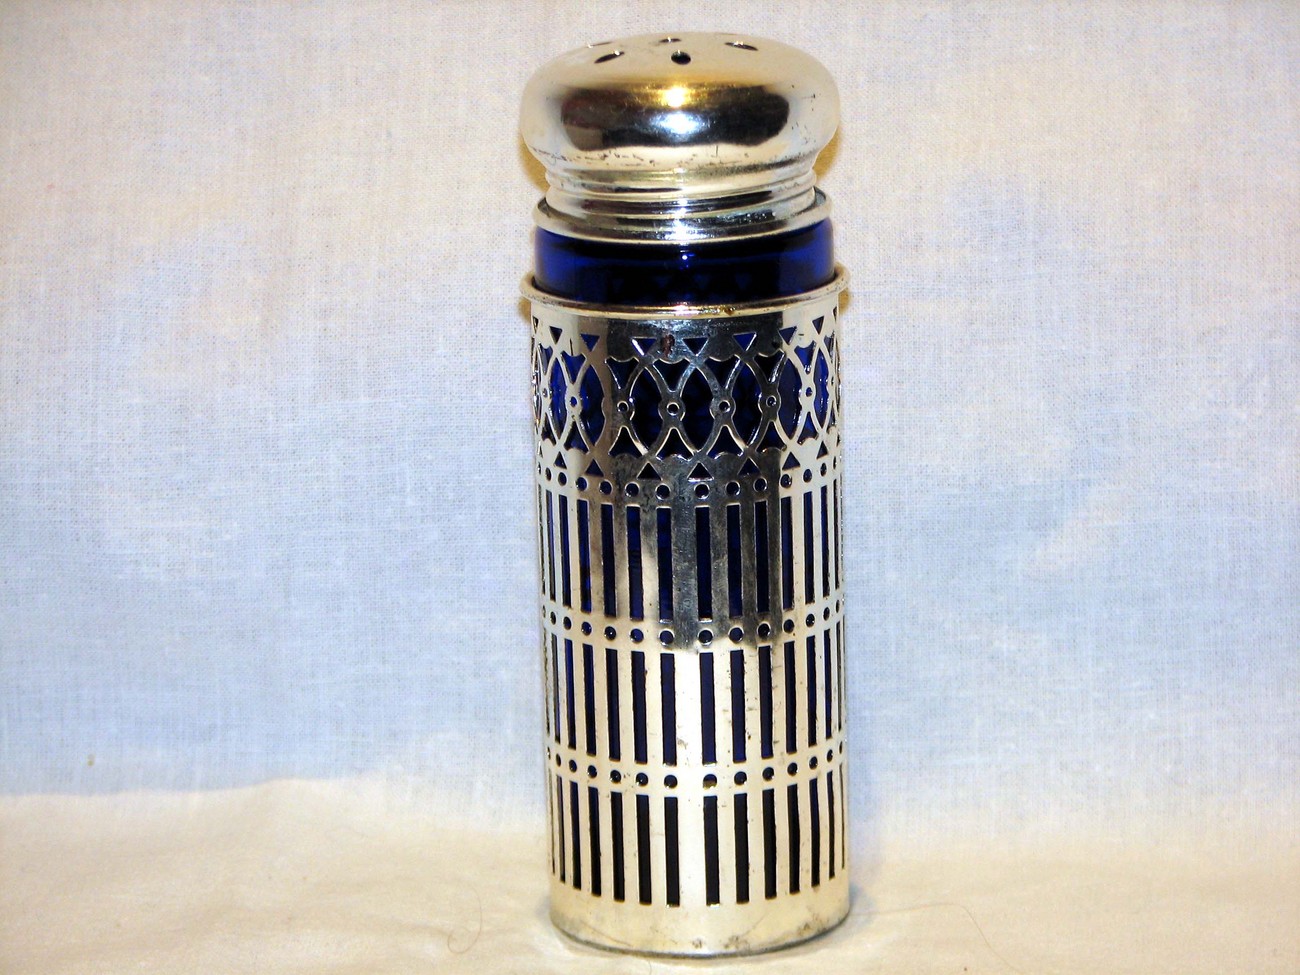 Blue Cobalt Salt Shaker - $9.00